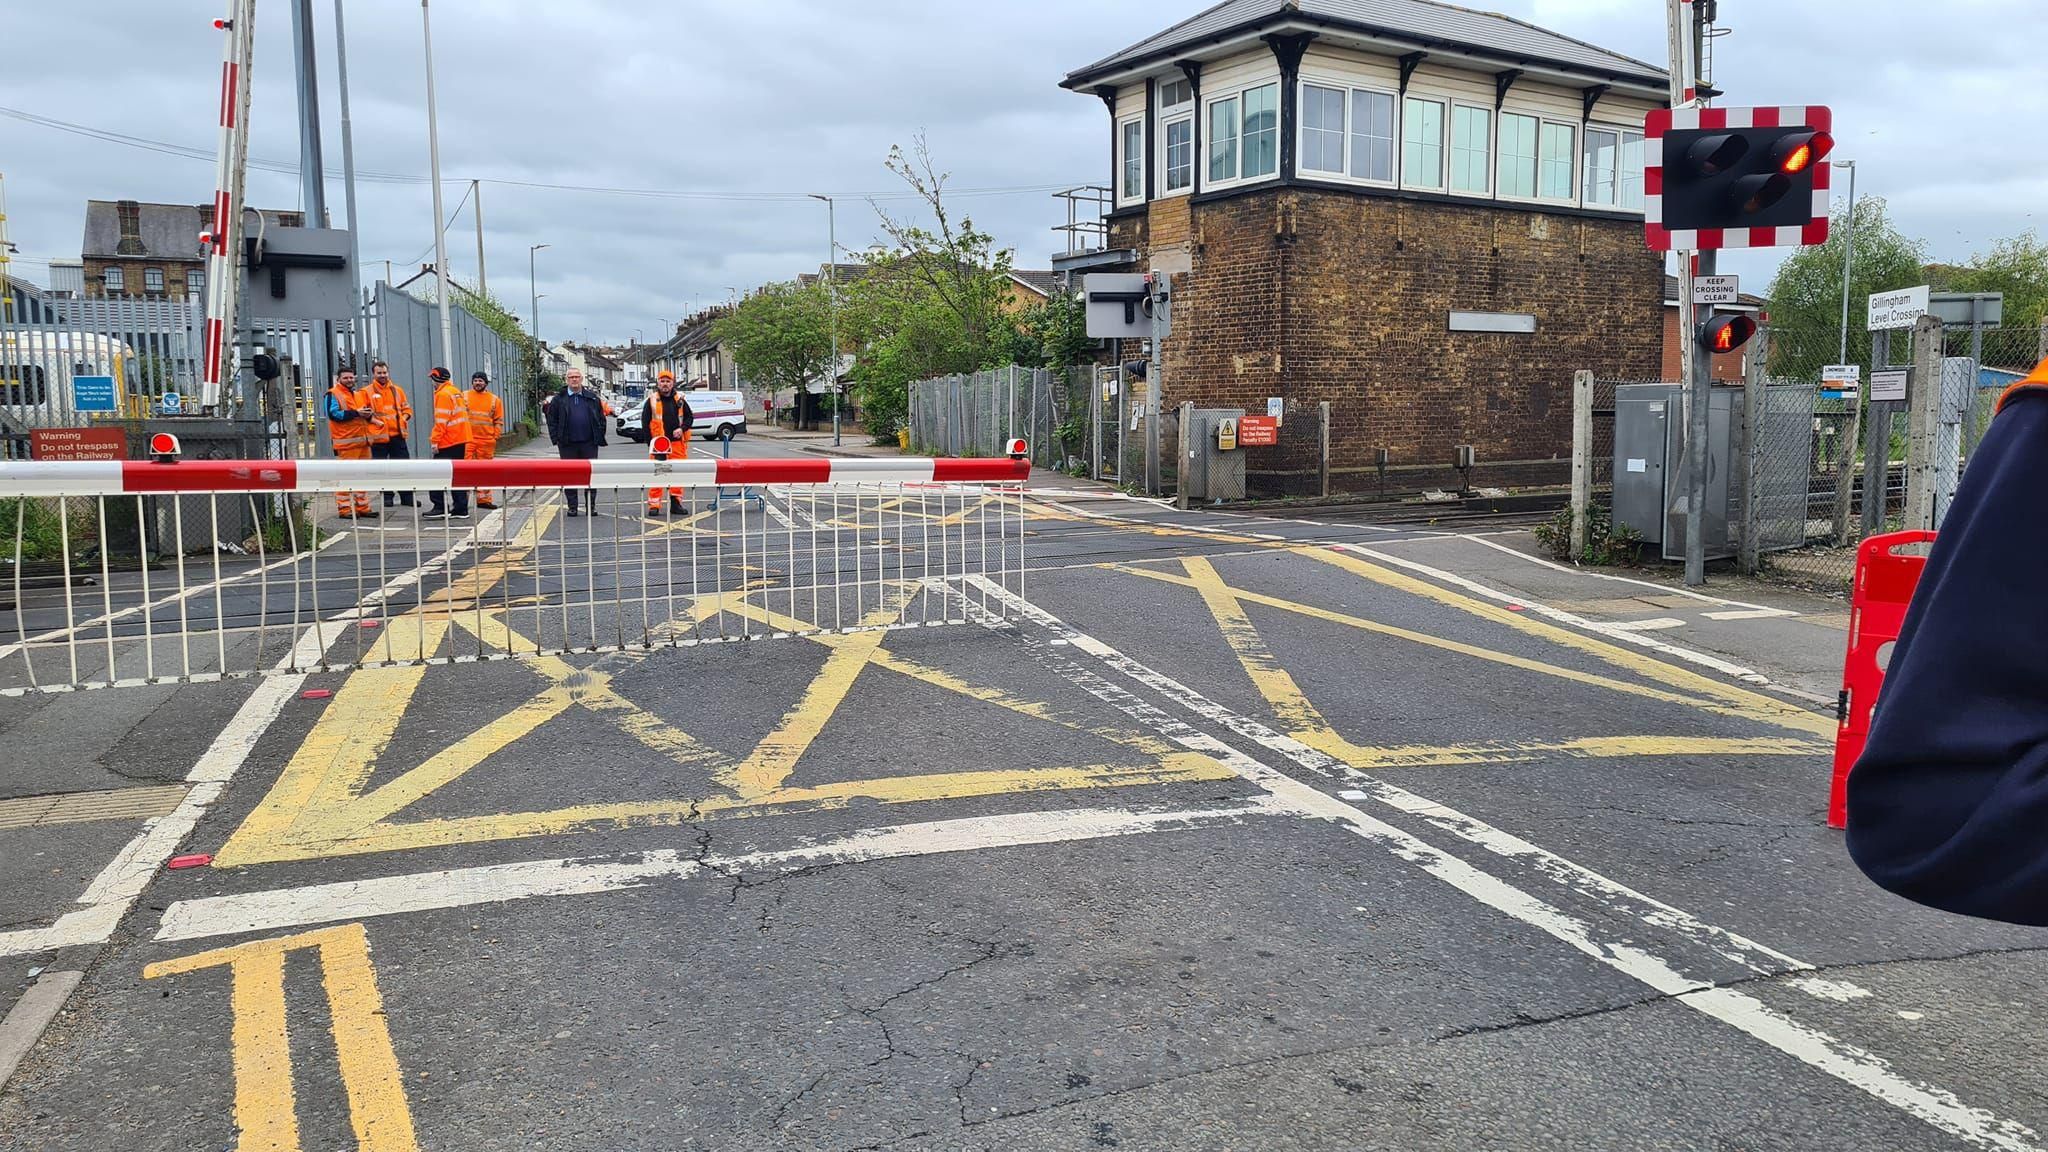 Missing level crossing barrier on line between Gillingham and Rainham